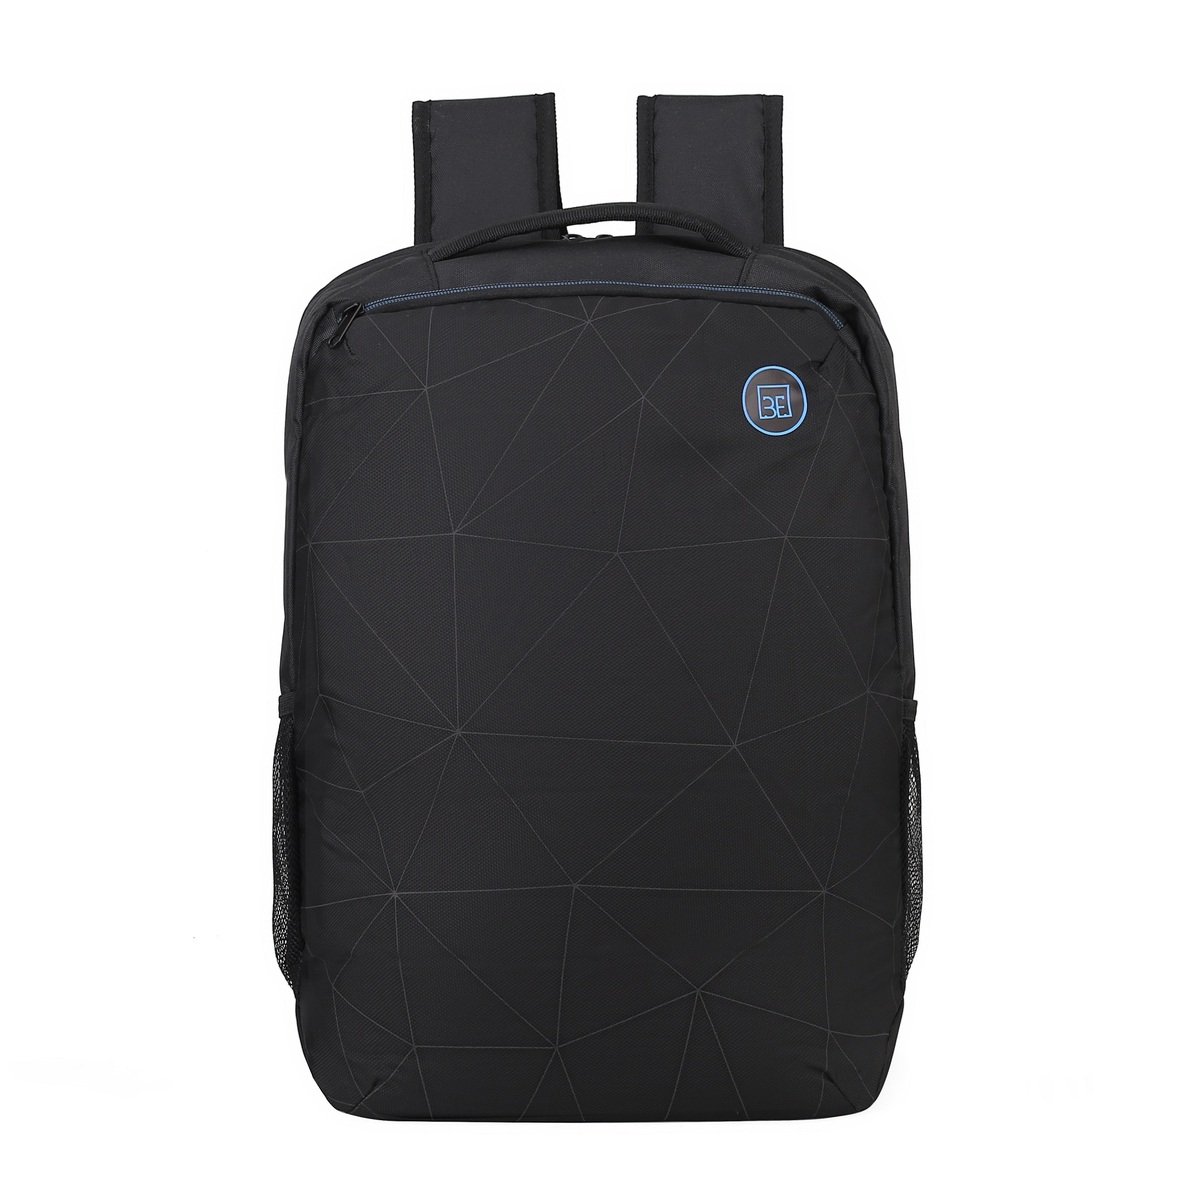 Beelite Laptop Back pack 2021 Online at Best Price | Laptop Backpacks ...